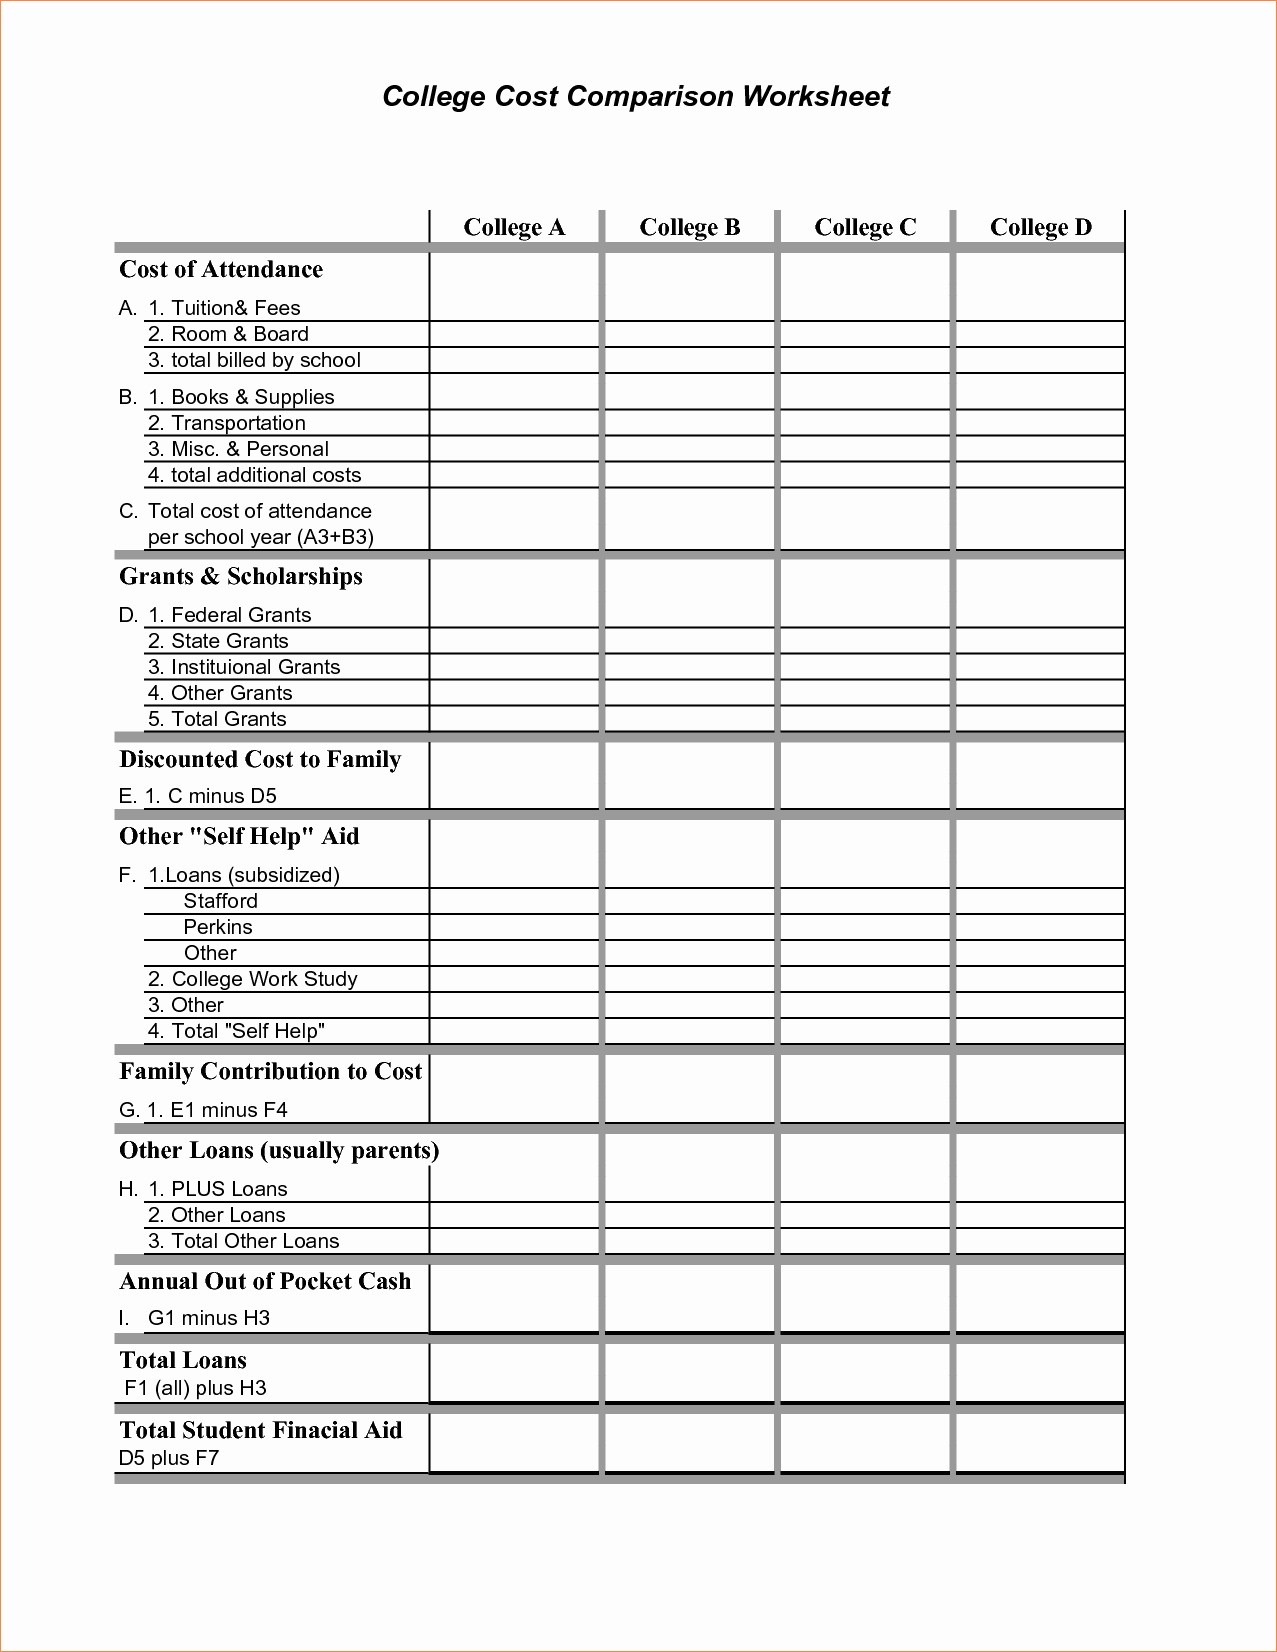 College Comparison Worksheet Excel Beautiful Parison Document Spreadsheet Template